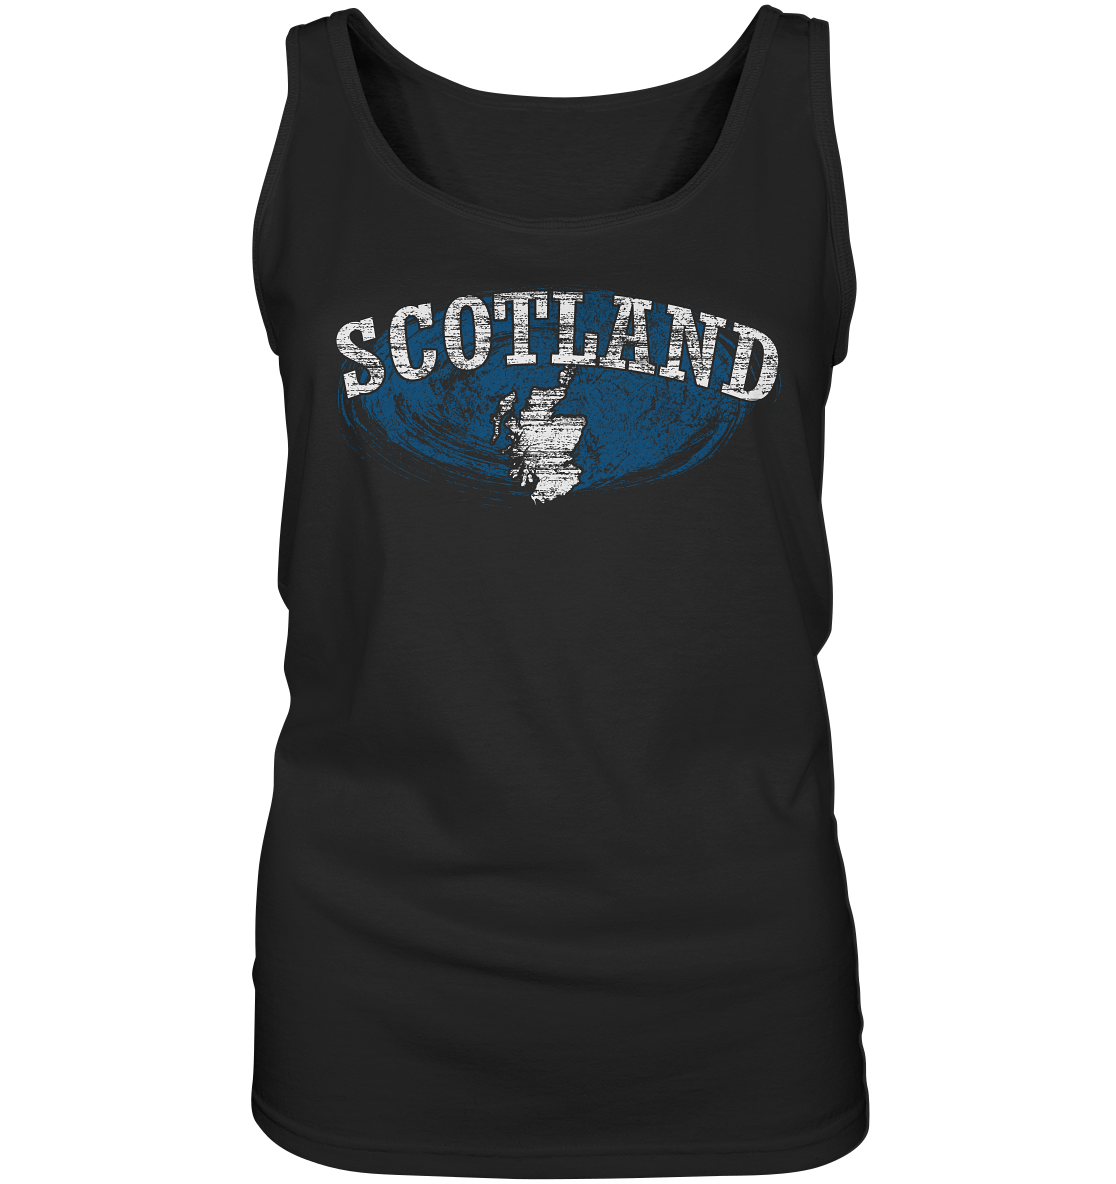 Scotland "Landscape" - Ladies Tank-Top